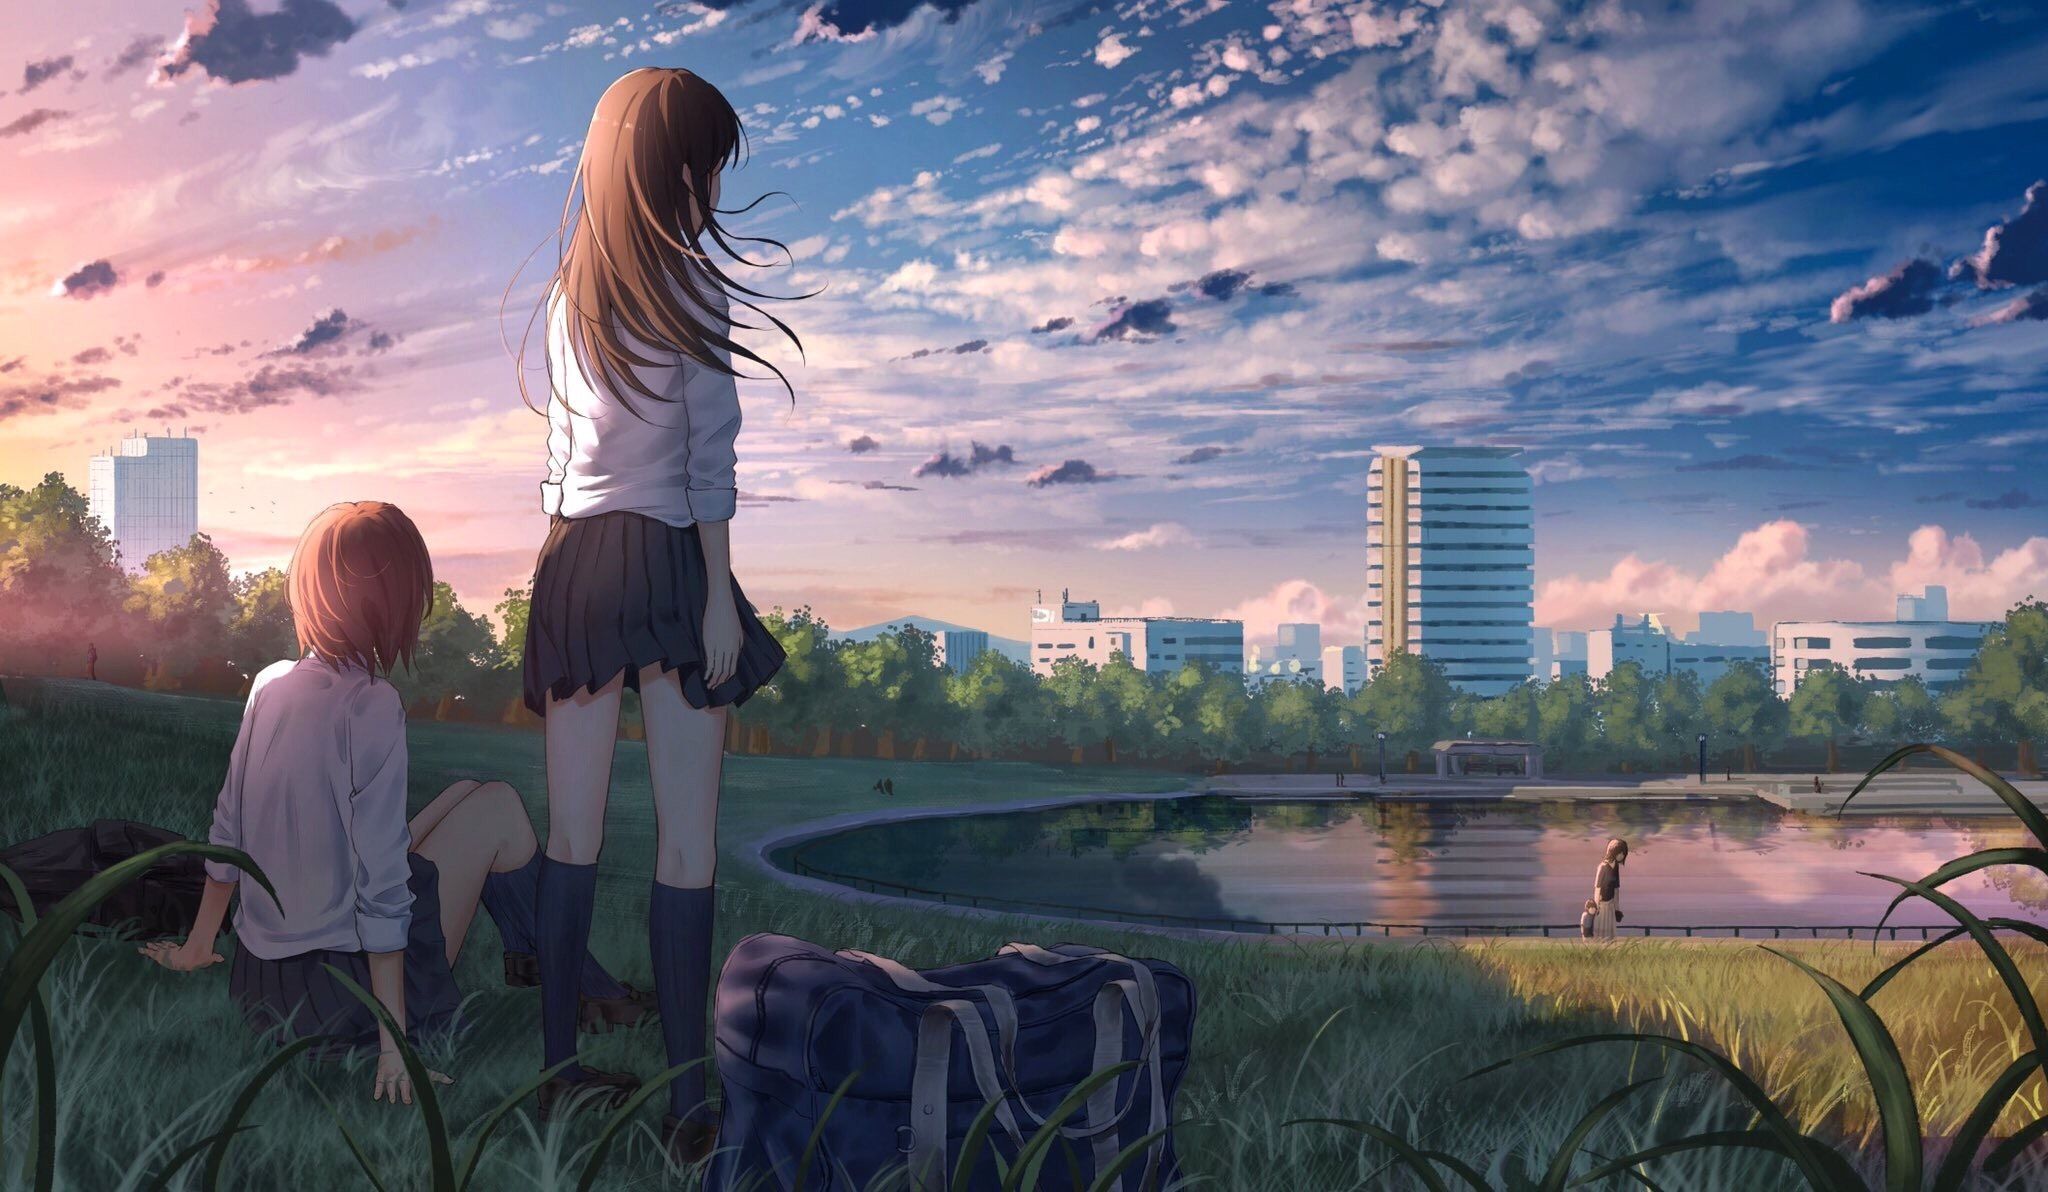 Anime Girl In School Uniform, HD Anime, 4k Wallpaper, Image